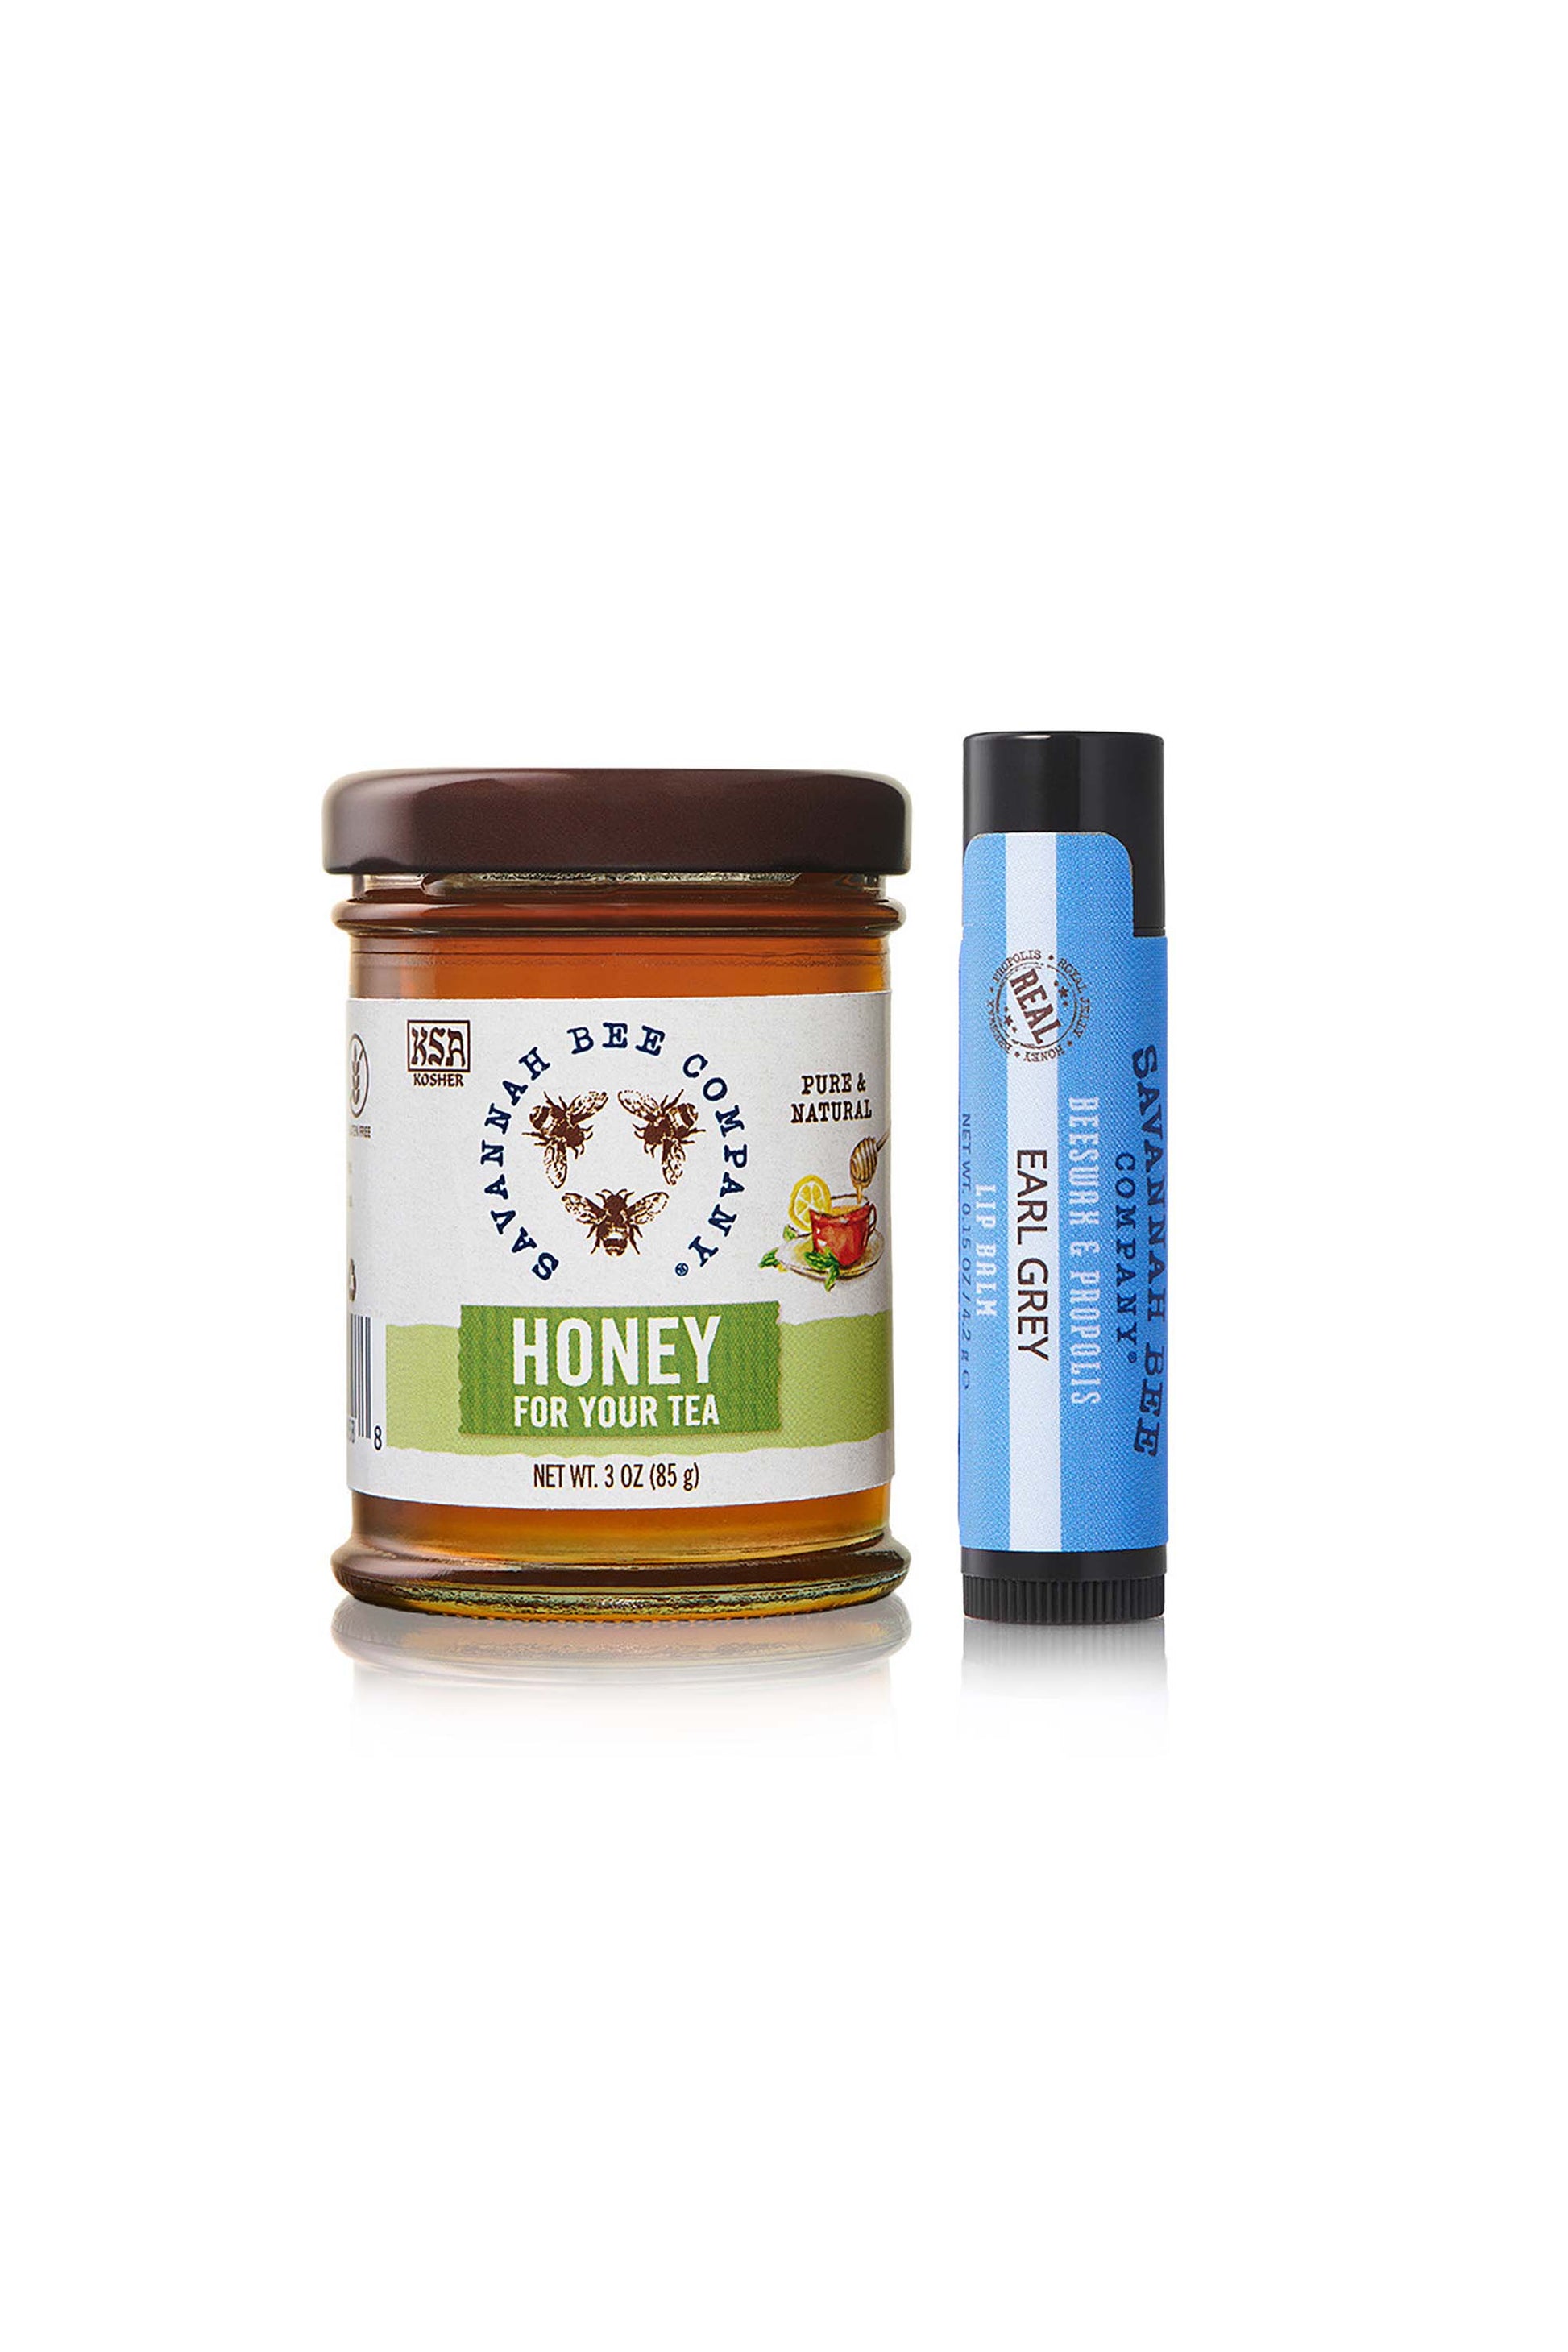 Honey for you tea 3 oz. mini with Earl Grey Lip Balm 